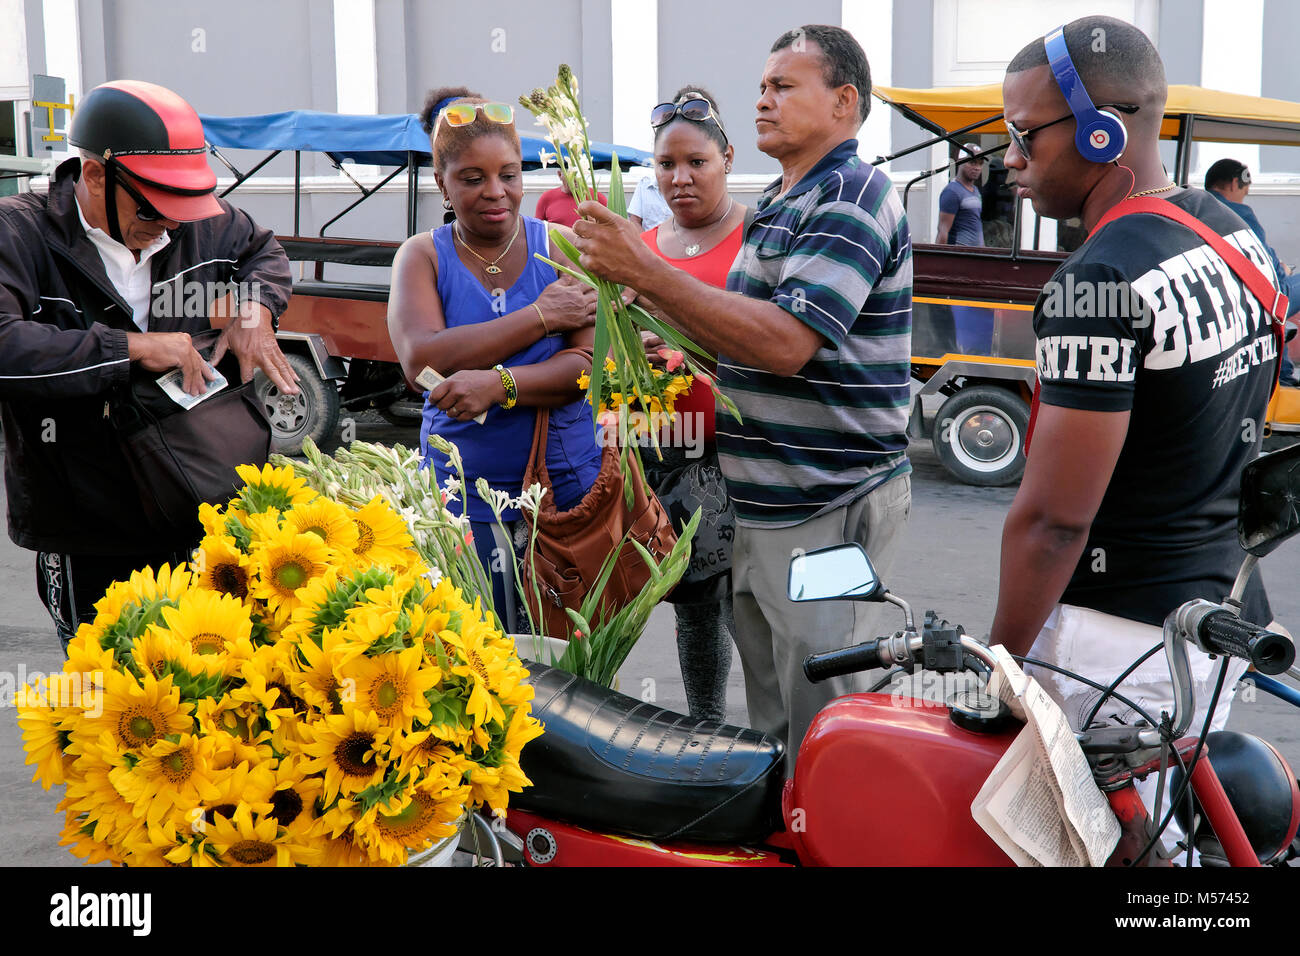 Flowers market - mobile flowers shop on a bike, Cienfuegos, Cuba, Caribbean Stock Photo